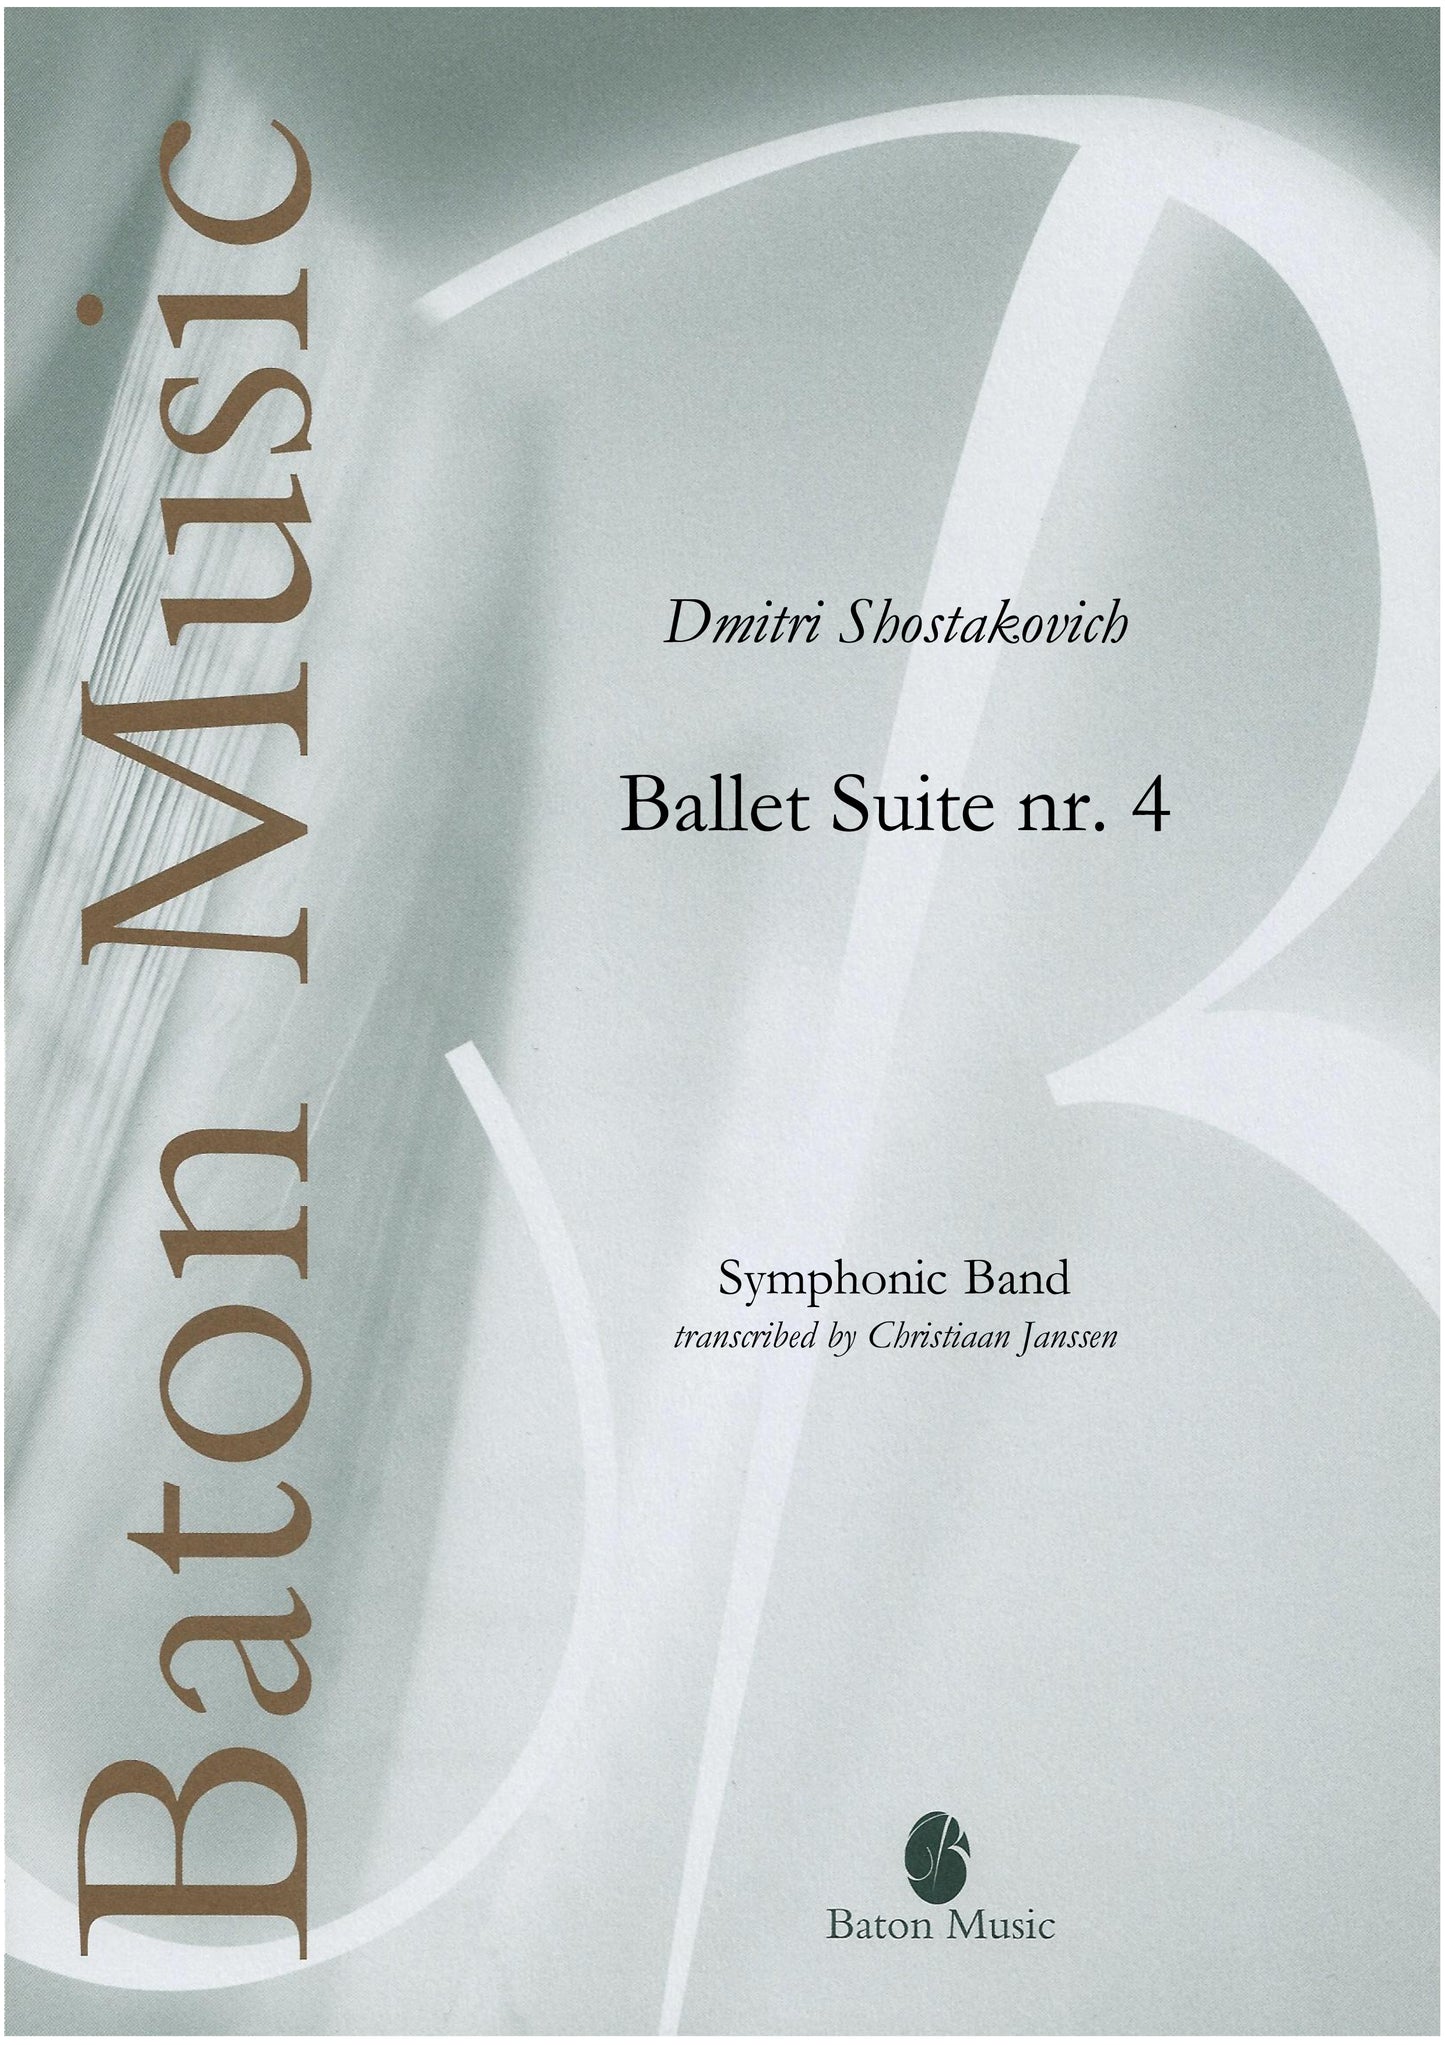 Ballet Suite No. 4 - Dmitri Shostakovich